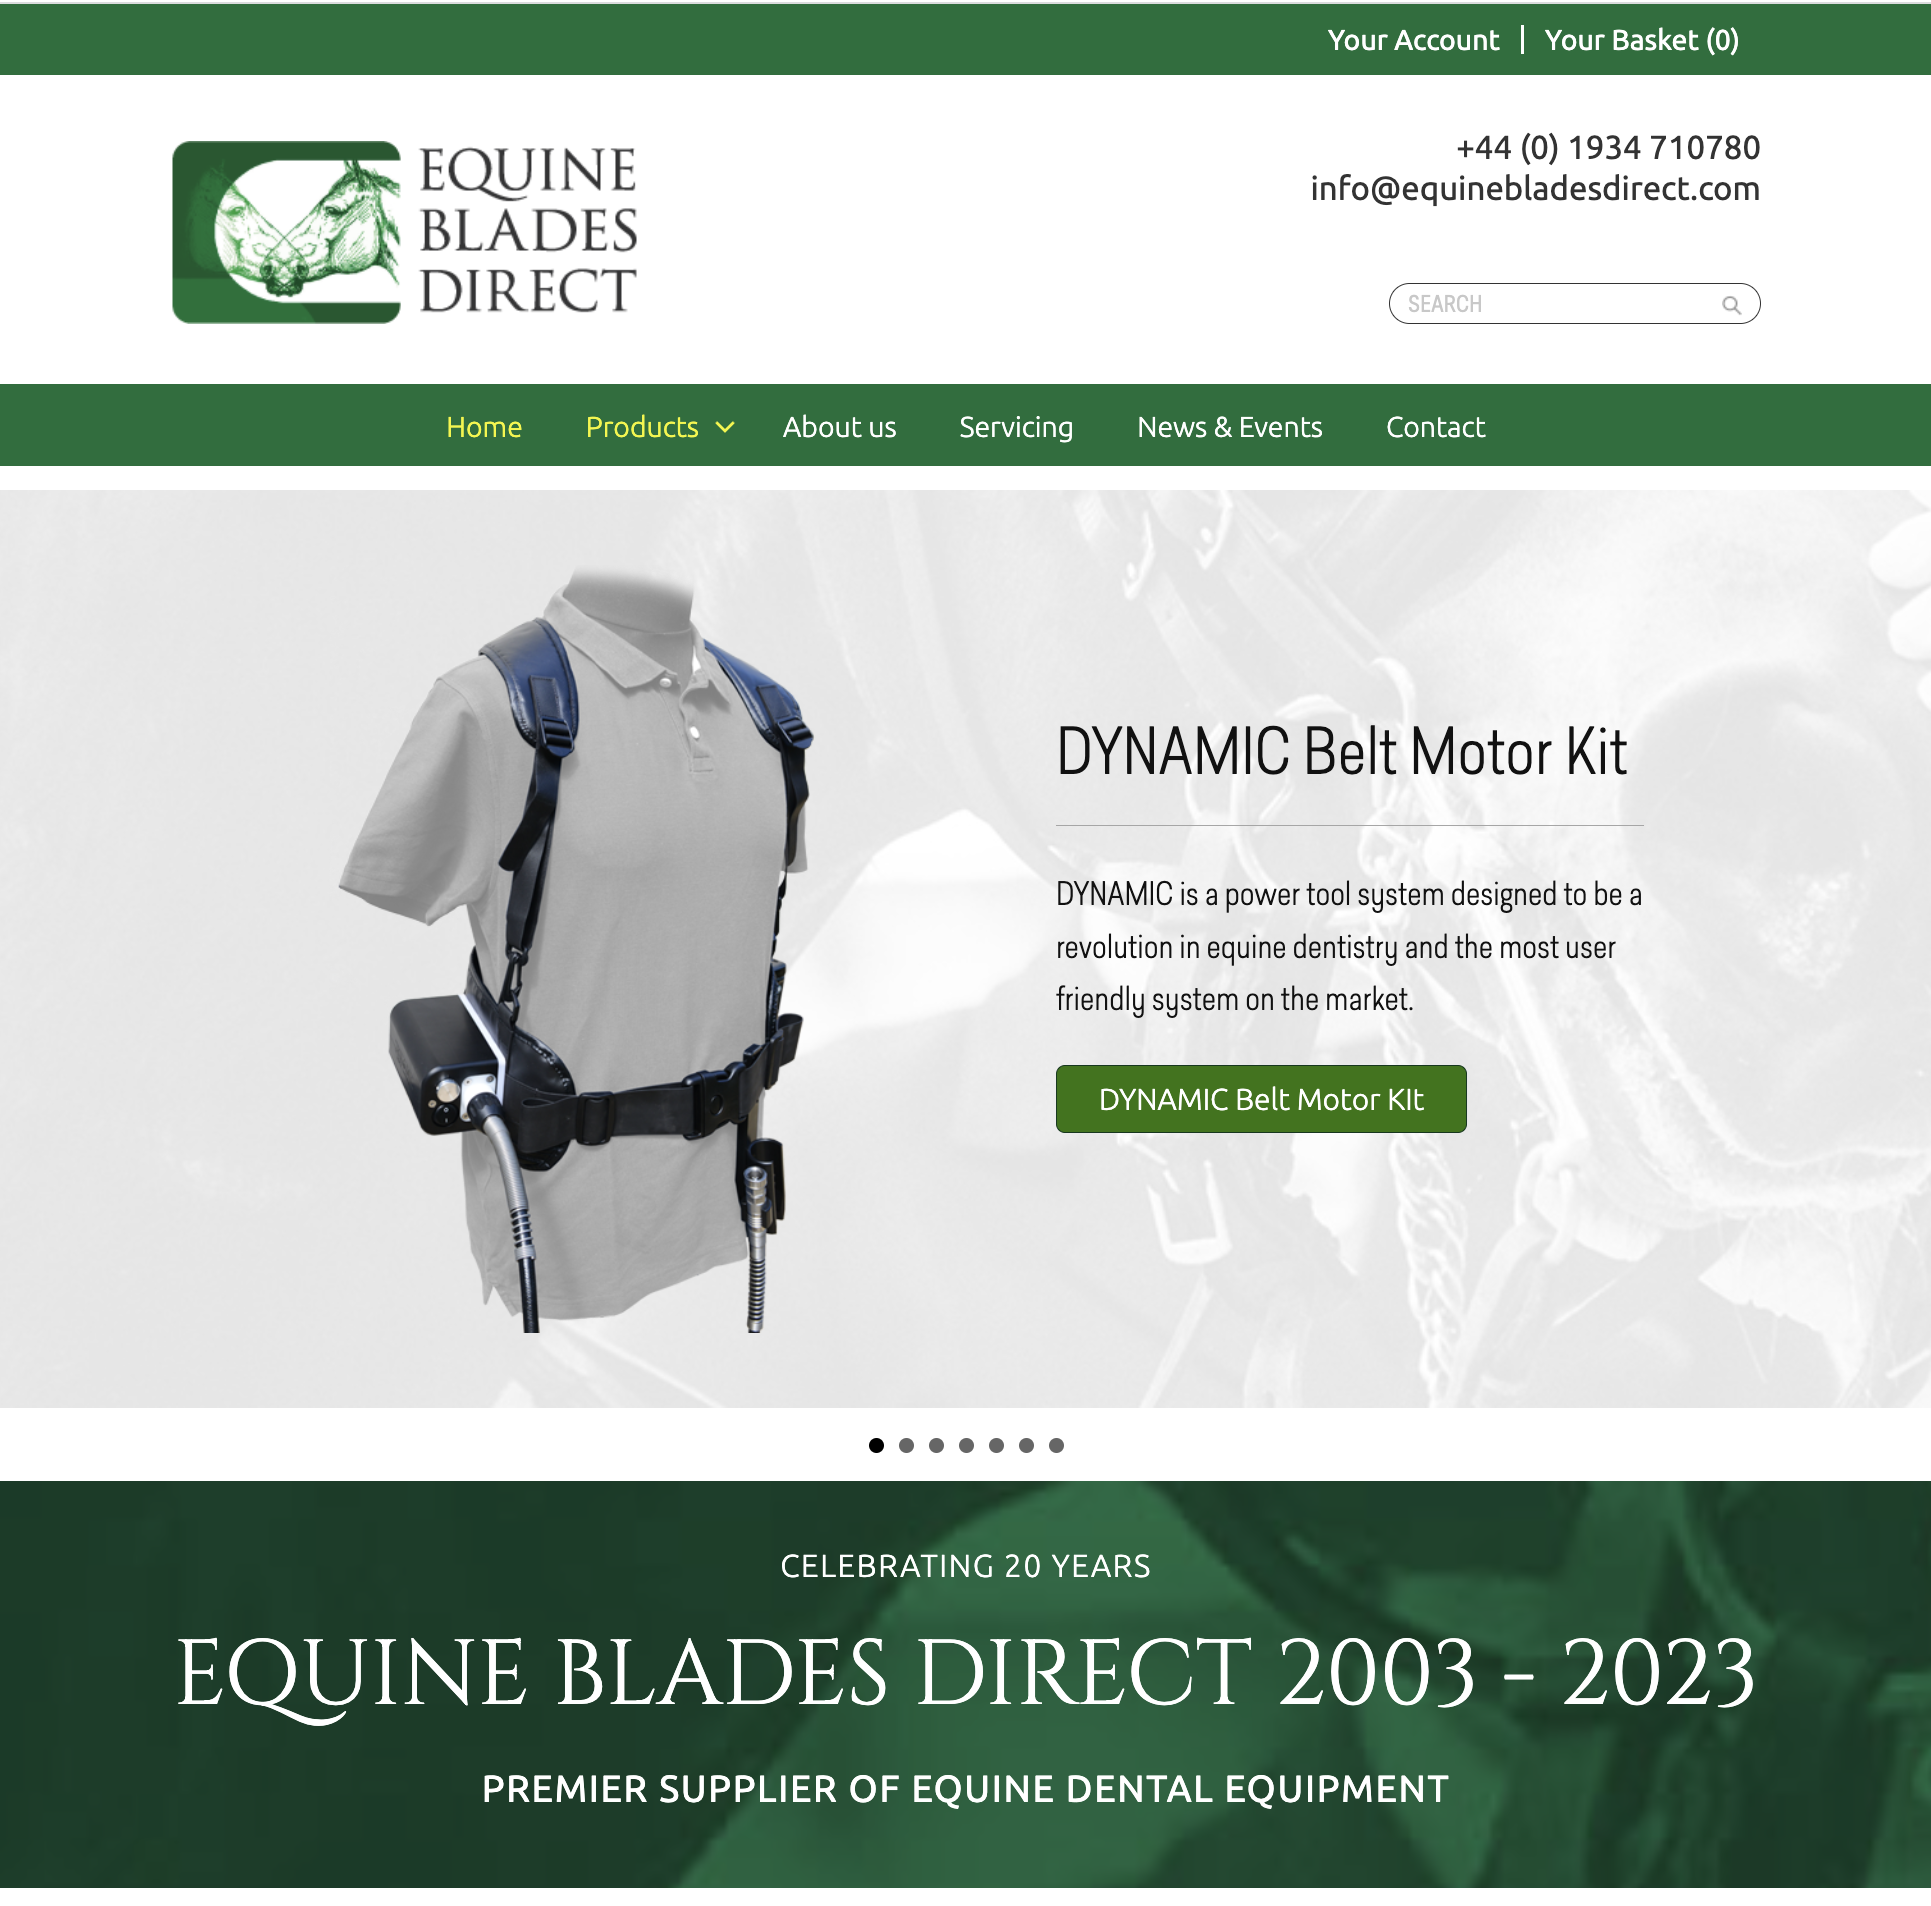 Equine Blades Direct website